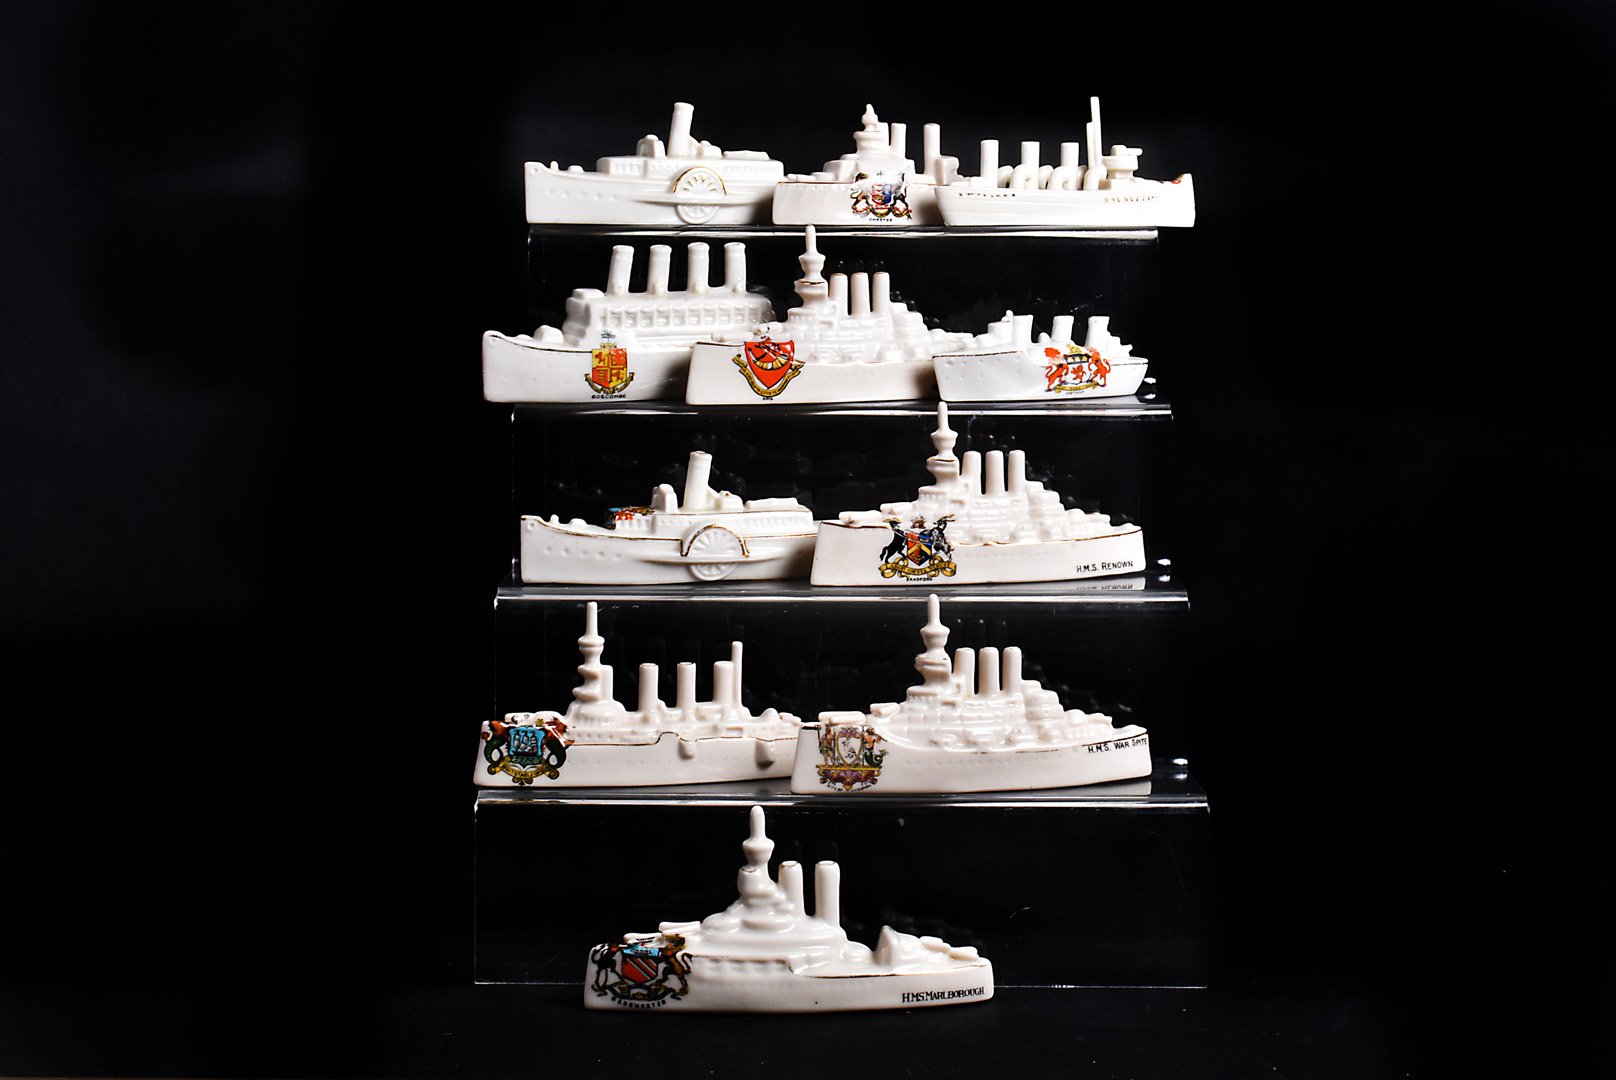 A selection of 11 crested ship models, comprising HMS War Spite (Liverpool), HMS Marlborough (